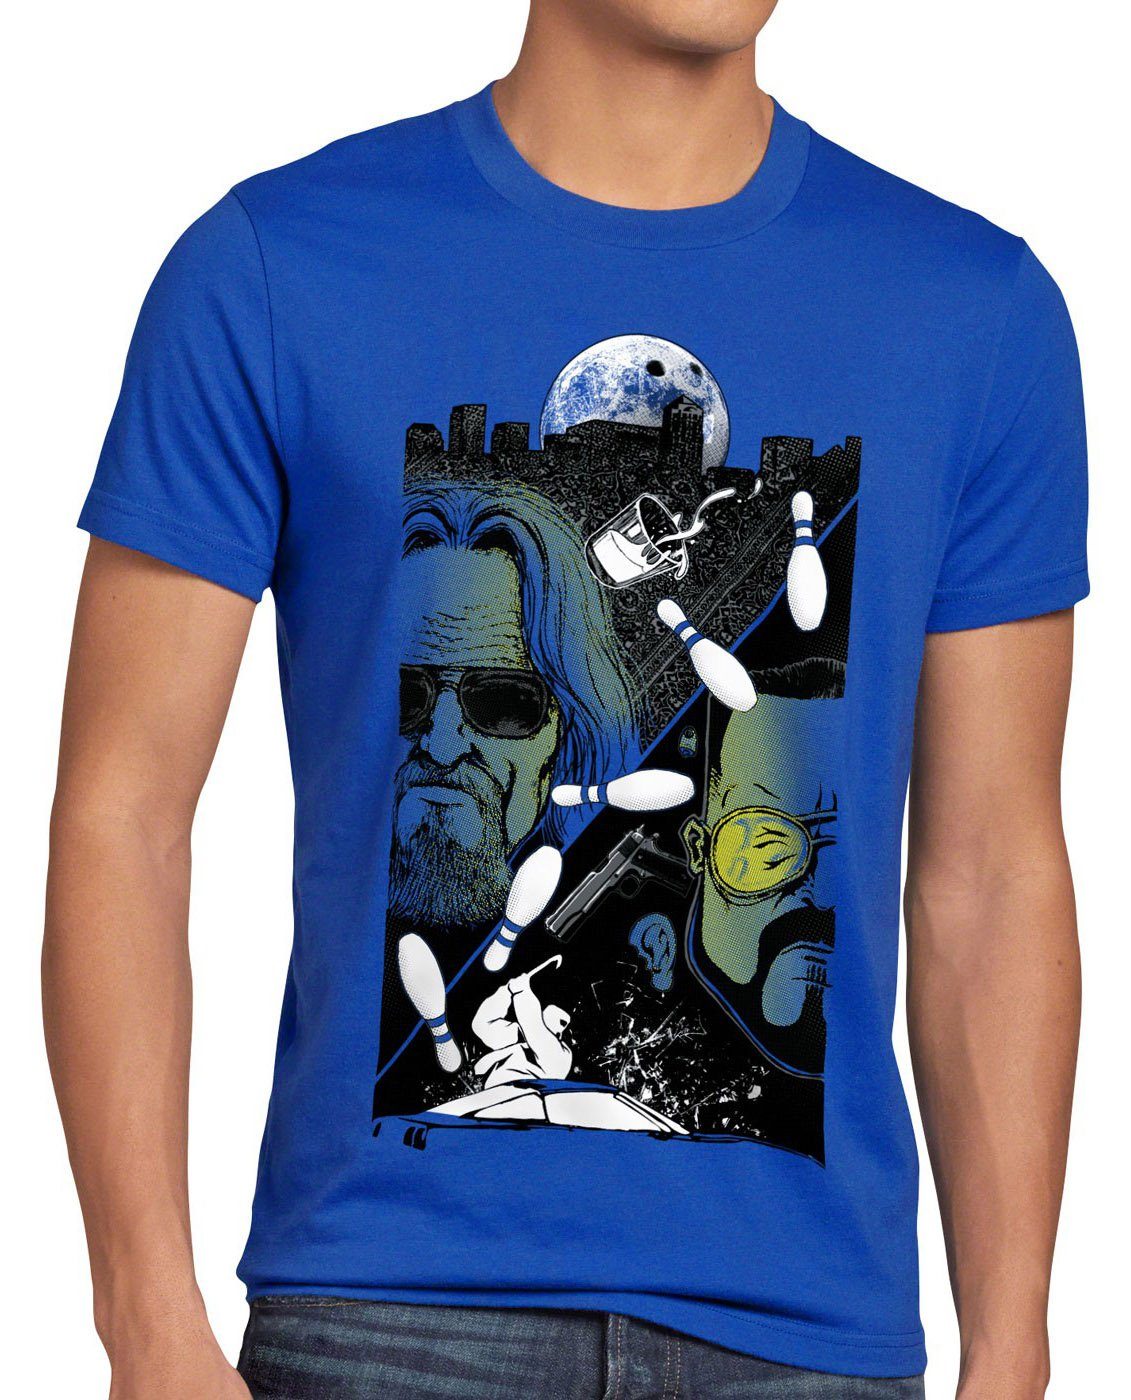 The big Herren bowling bowler Dude john blau lebowski style3 T-Shirt Bridges Jeff Print-Shirt goodman